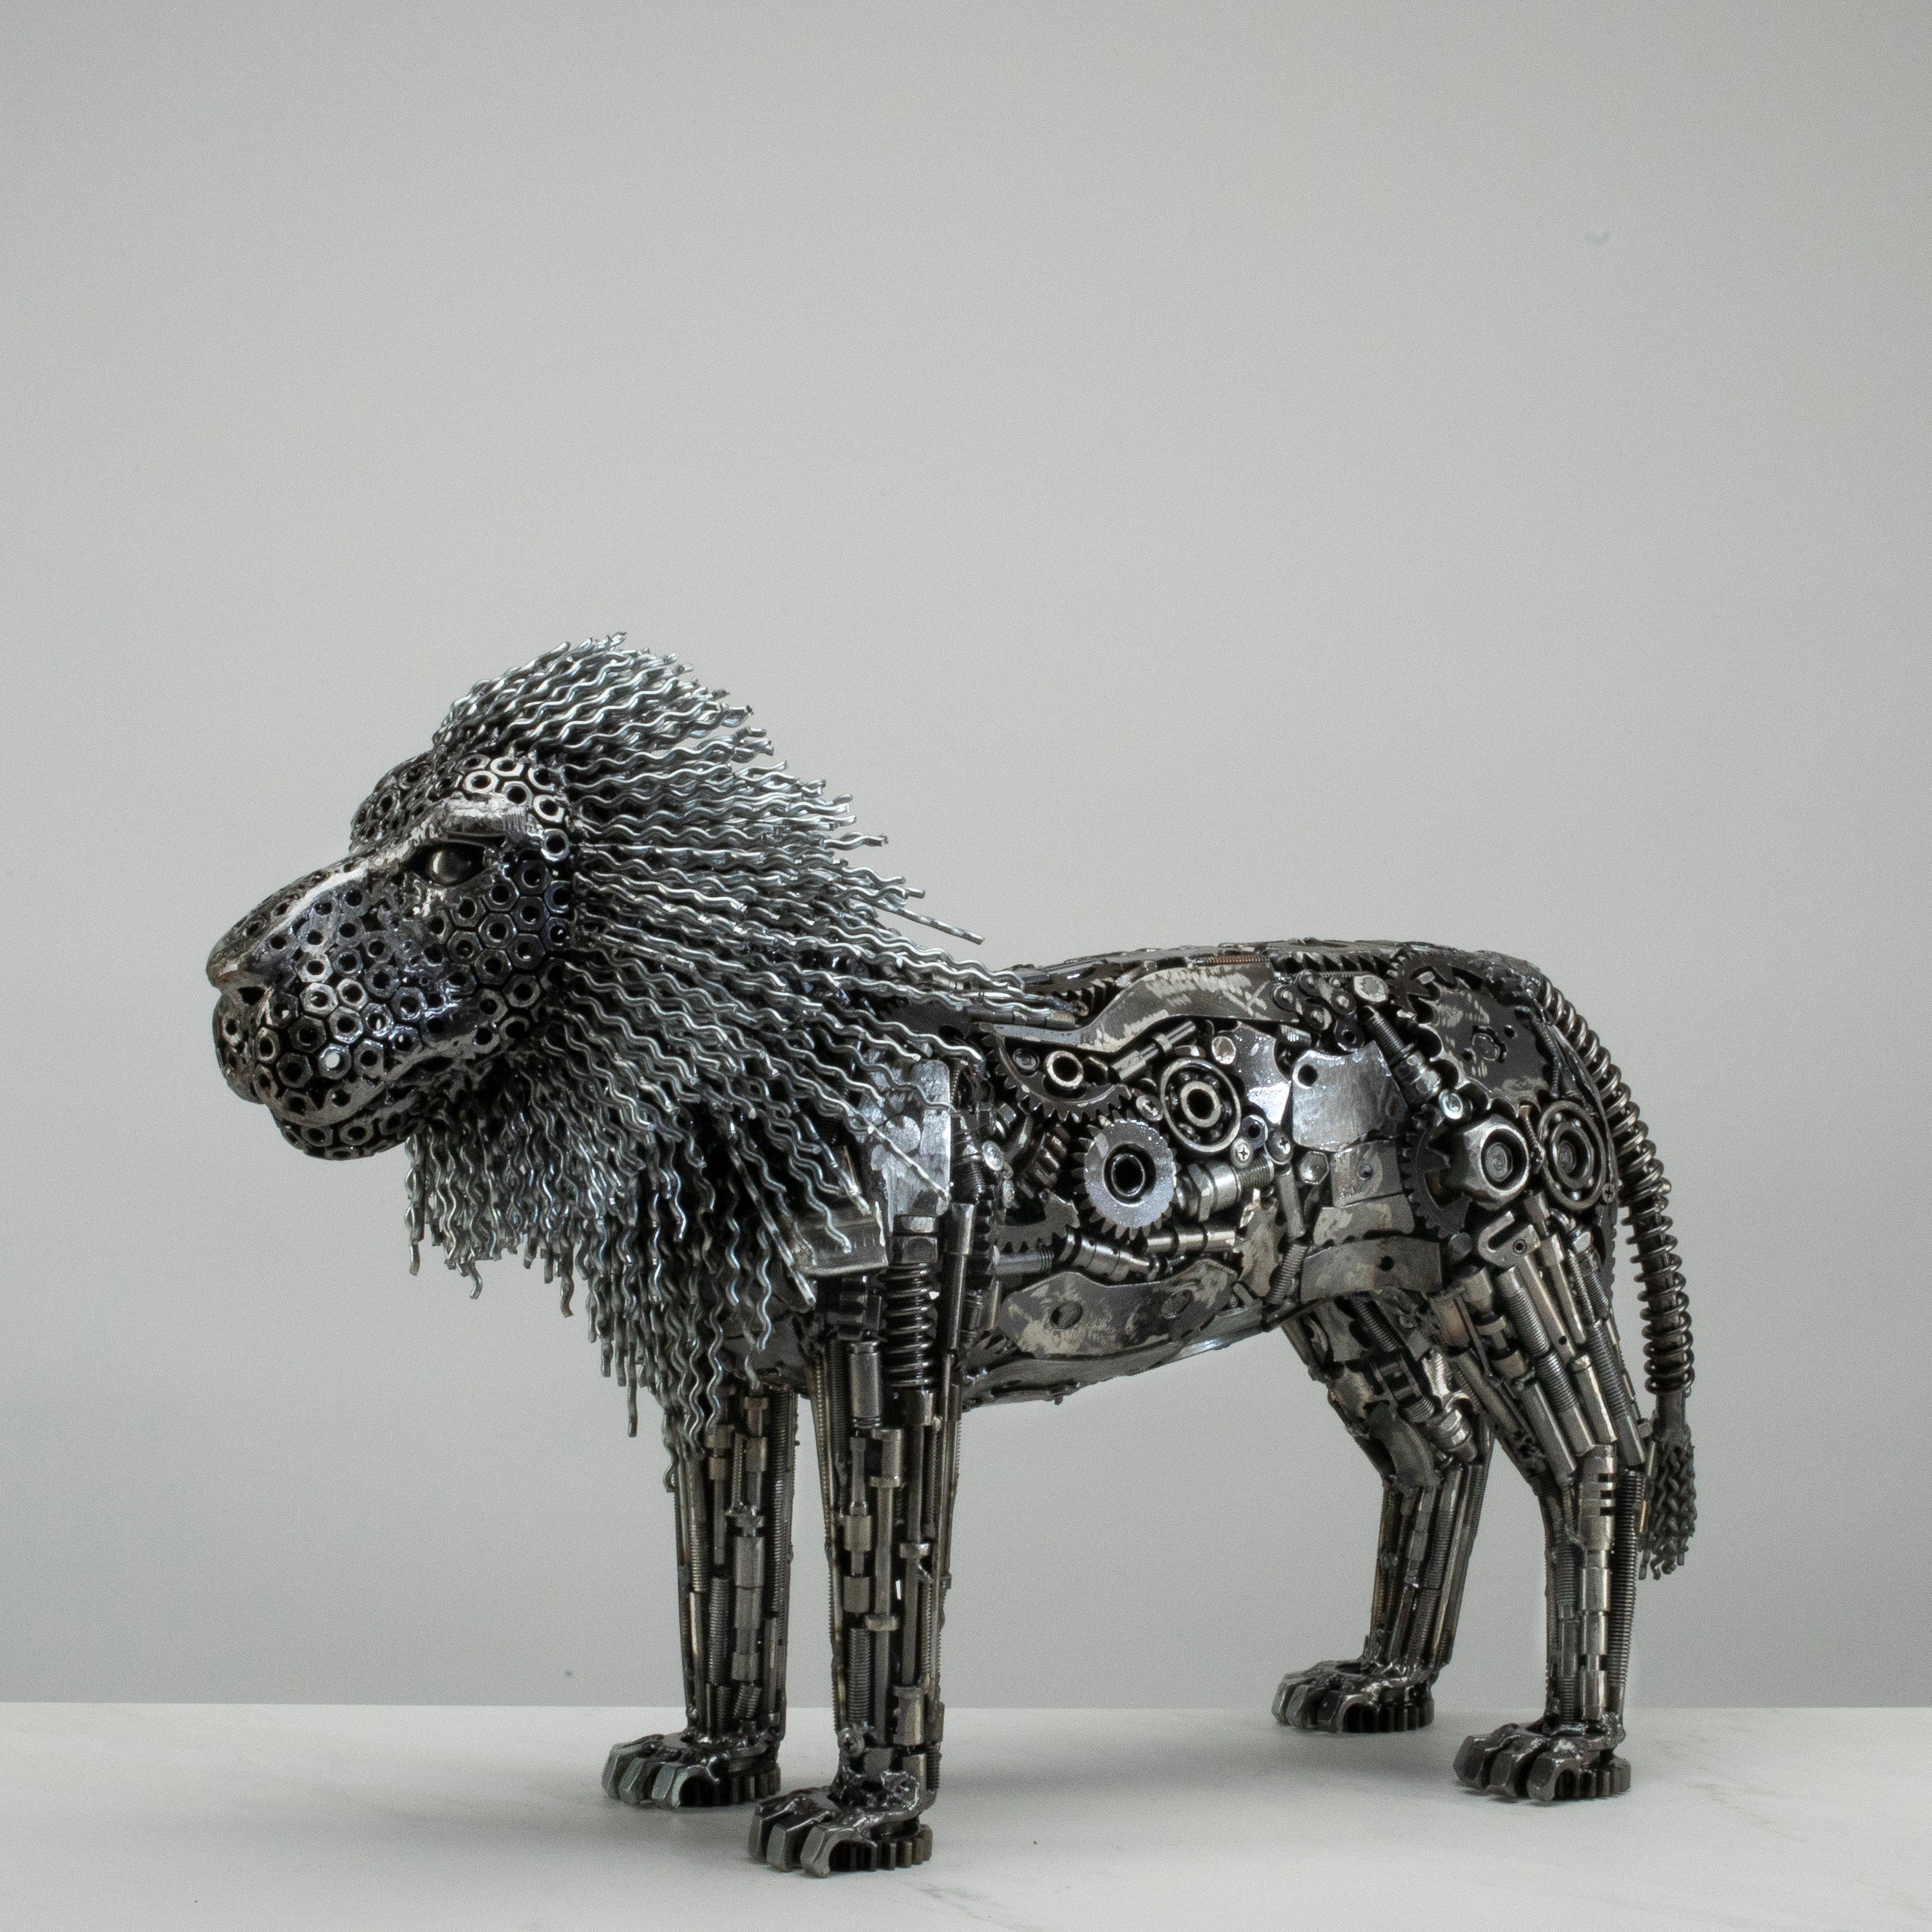 KALIFANO Recycled Metal Art 24" Lion Recycled Metal Art Sculpture RMS-LION60x42-PK